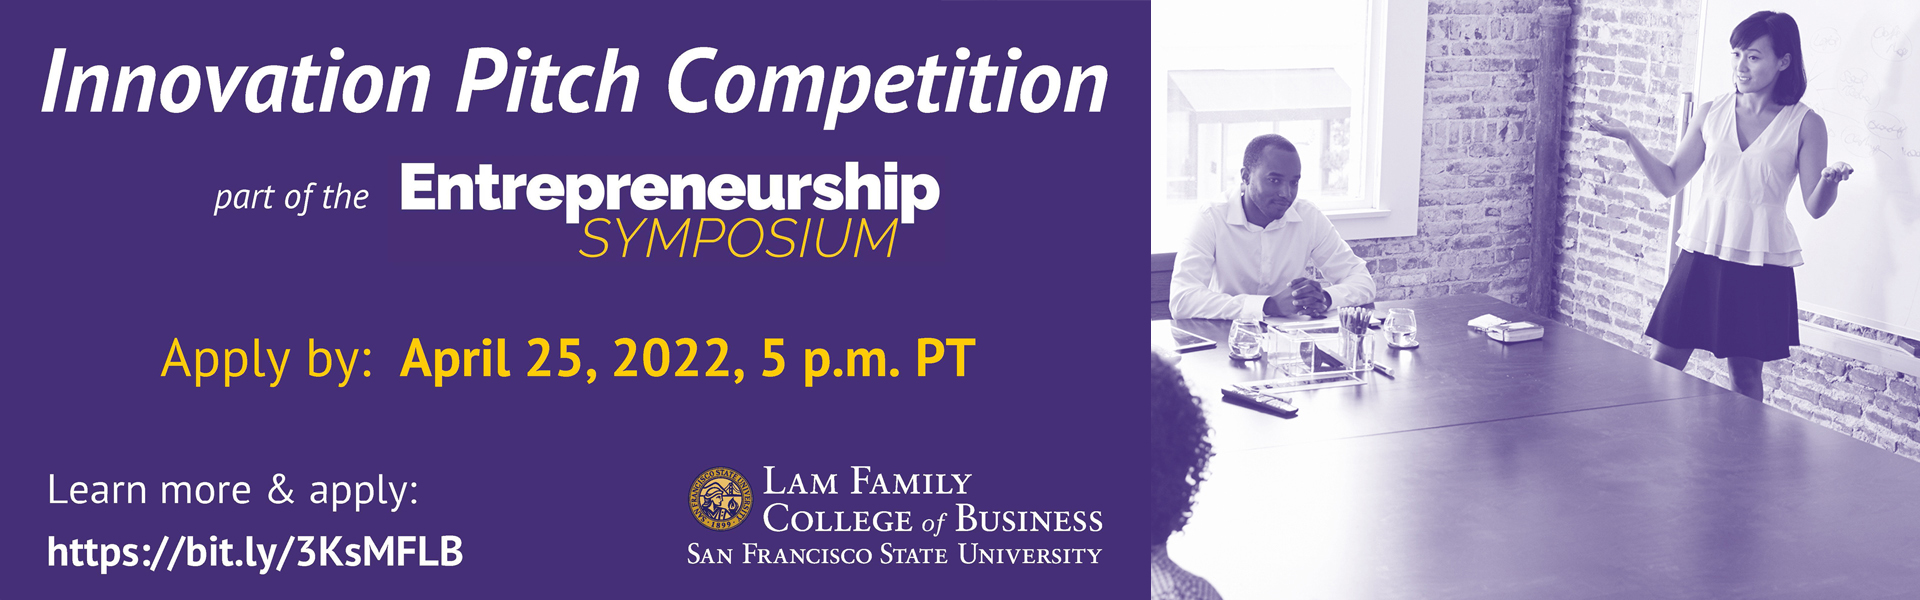 Entrepreneurship Symposium Pitch Competition April 25